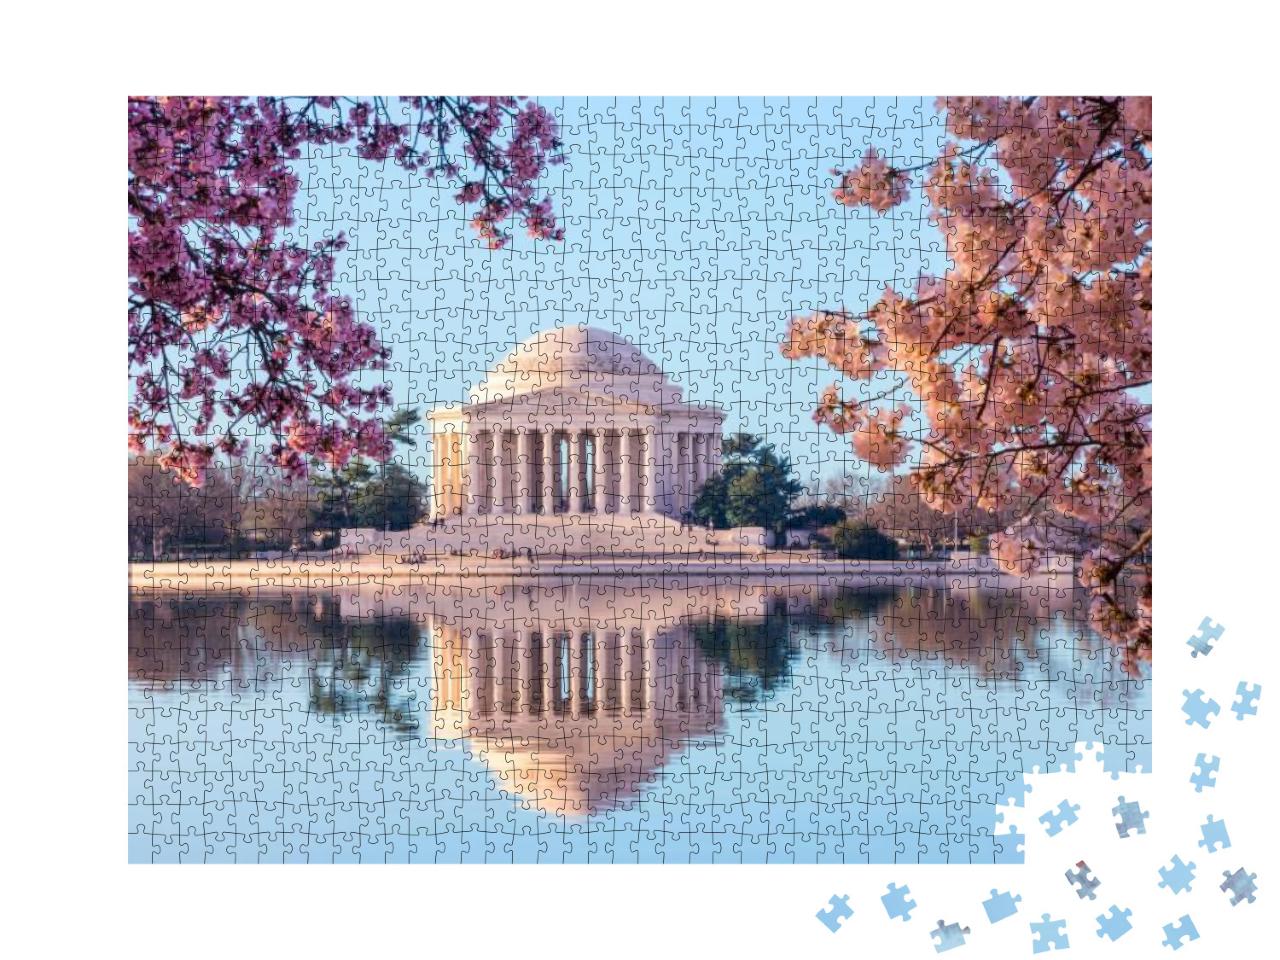 Sun Rising Illuminates the Jefferson Memorial & Tidal Bas... Jigsaw Puzzle with 1000 pieces